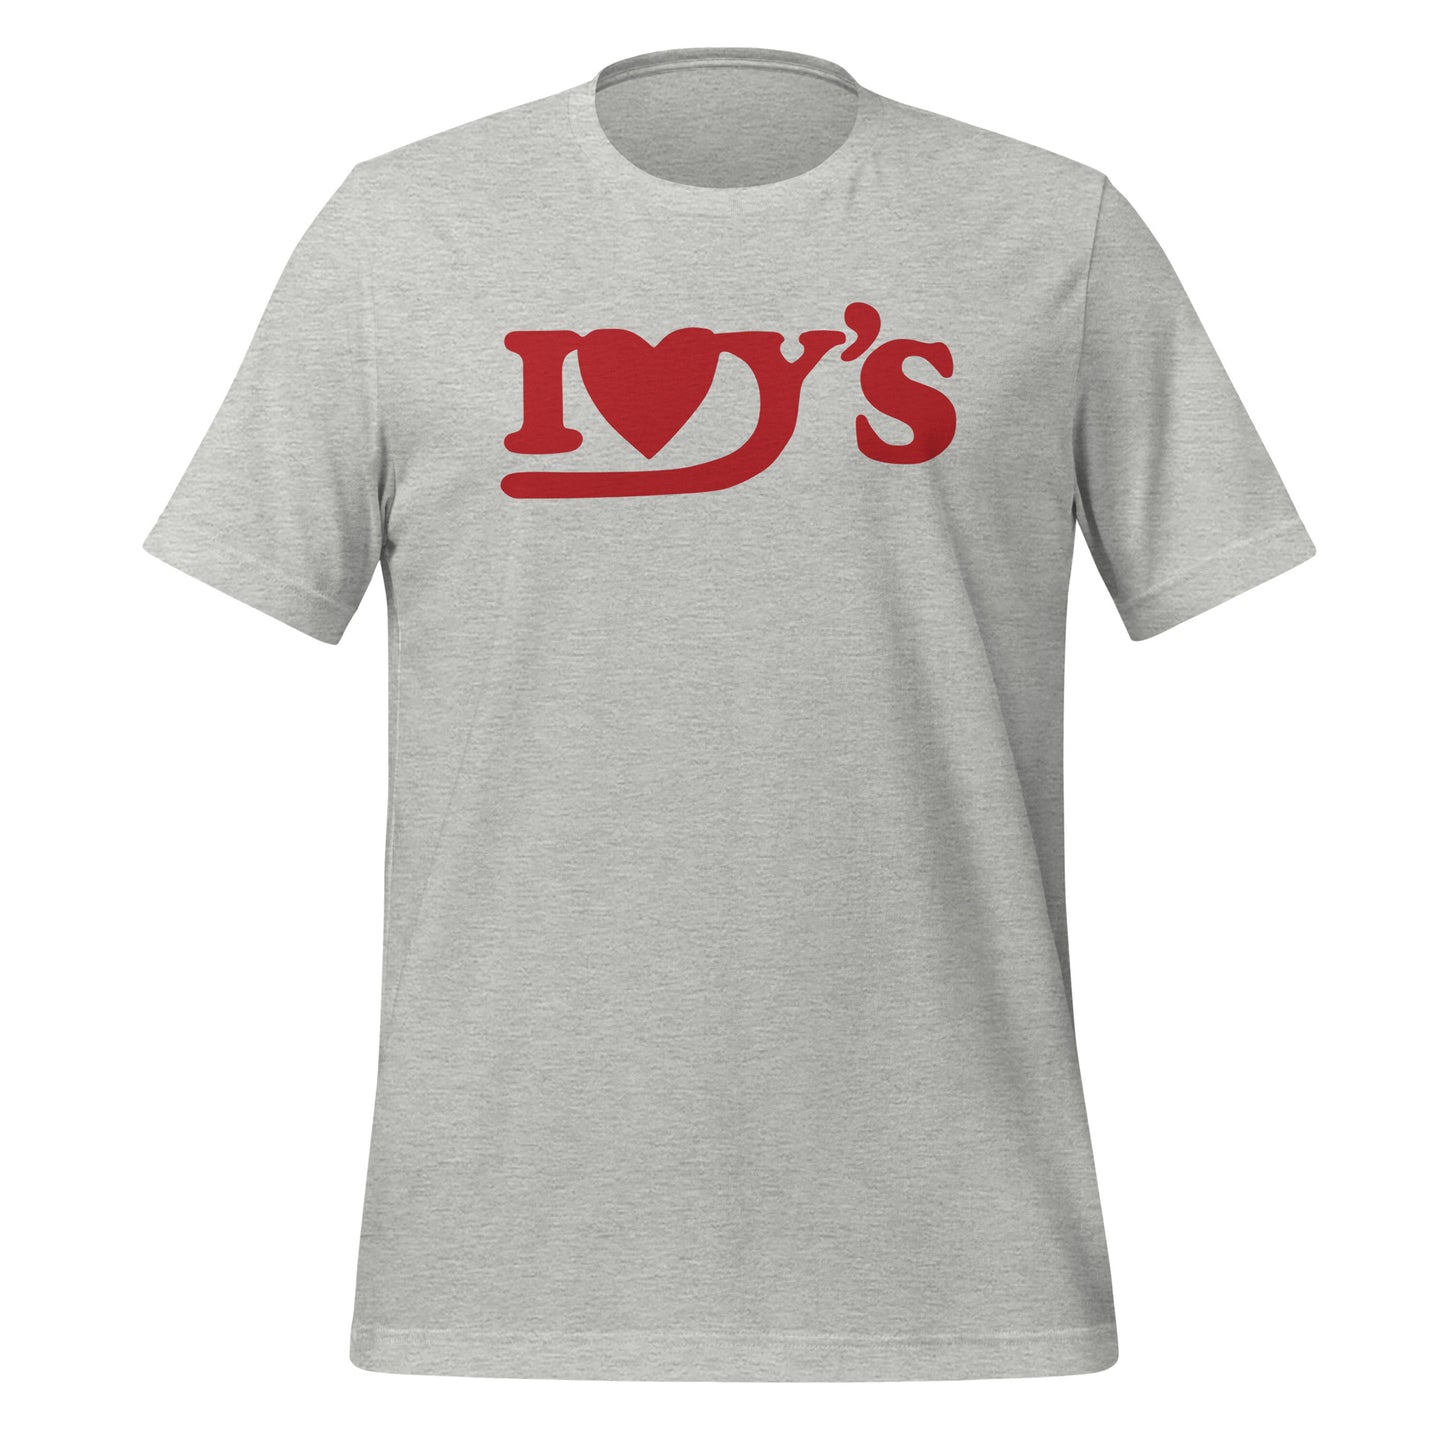 Ivy's unisex printed t-shirt